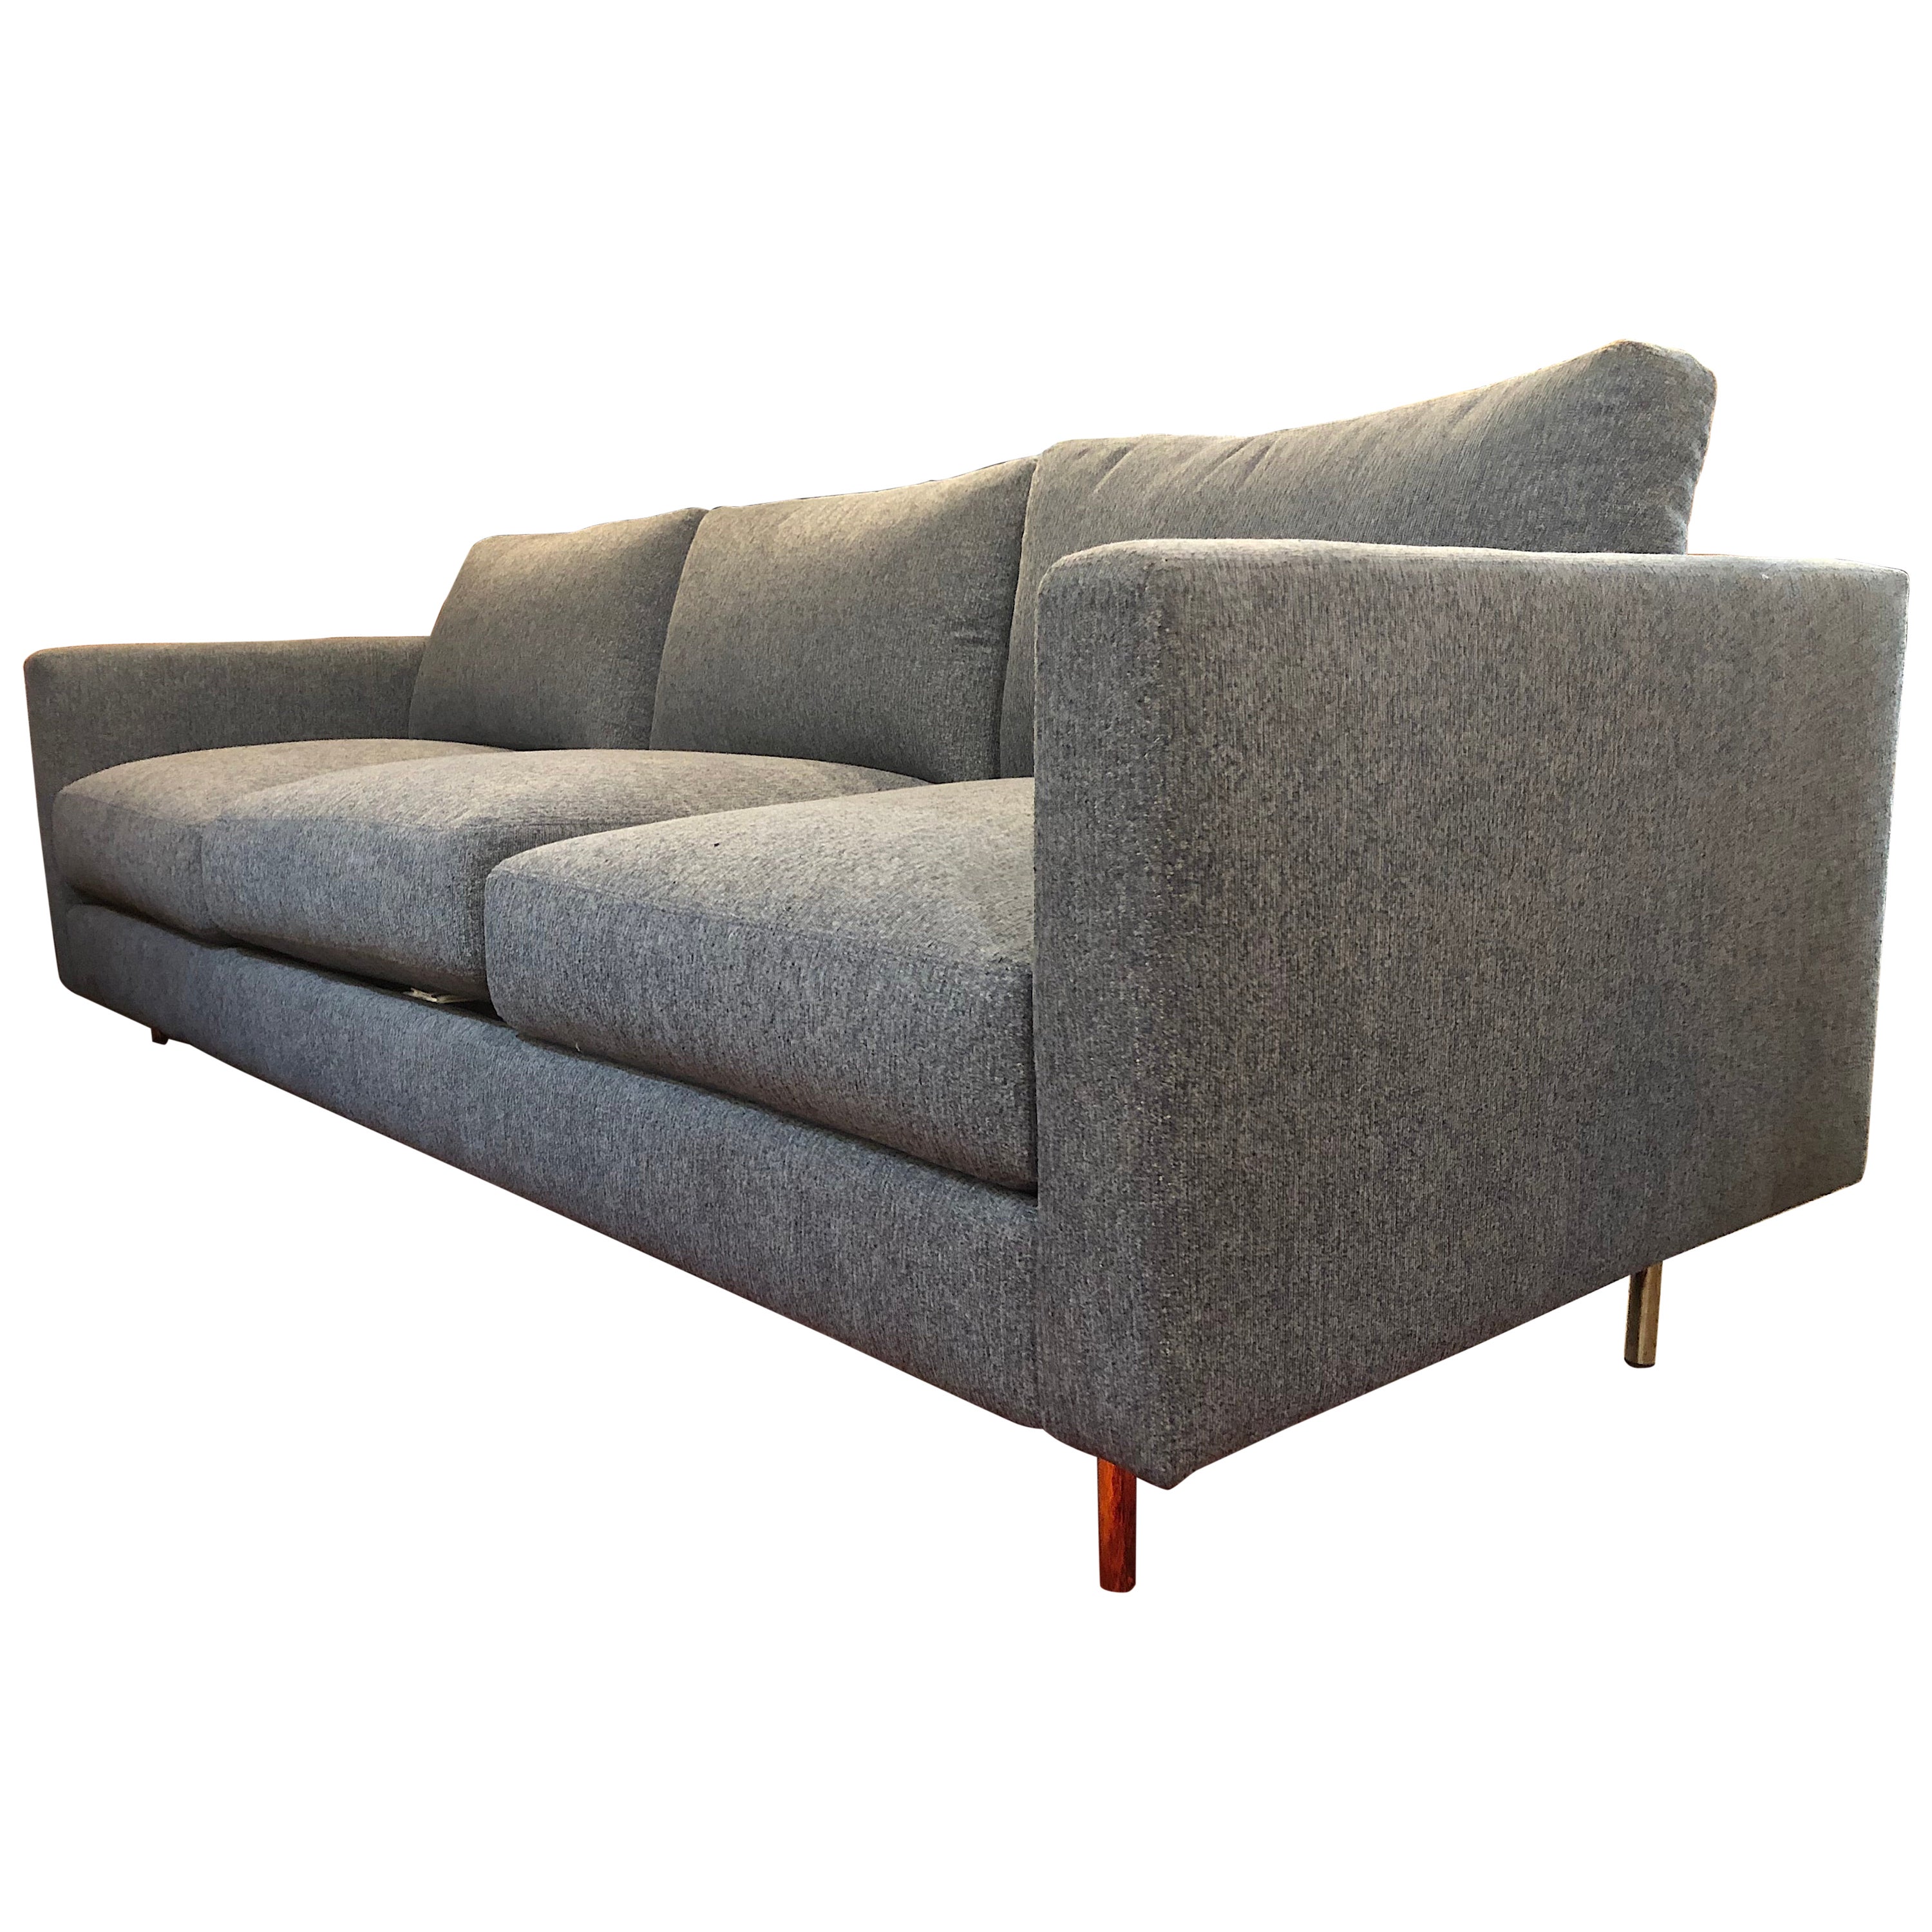 Milo Baughman Designed Get Down Sofa For Sale